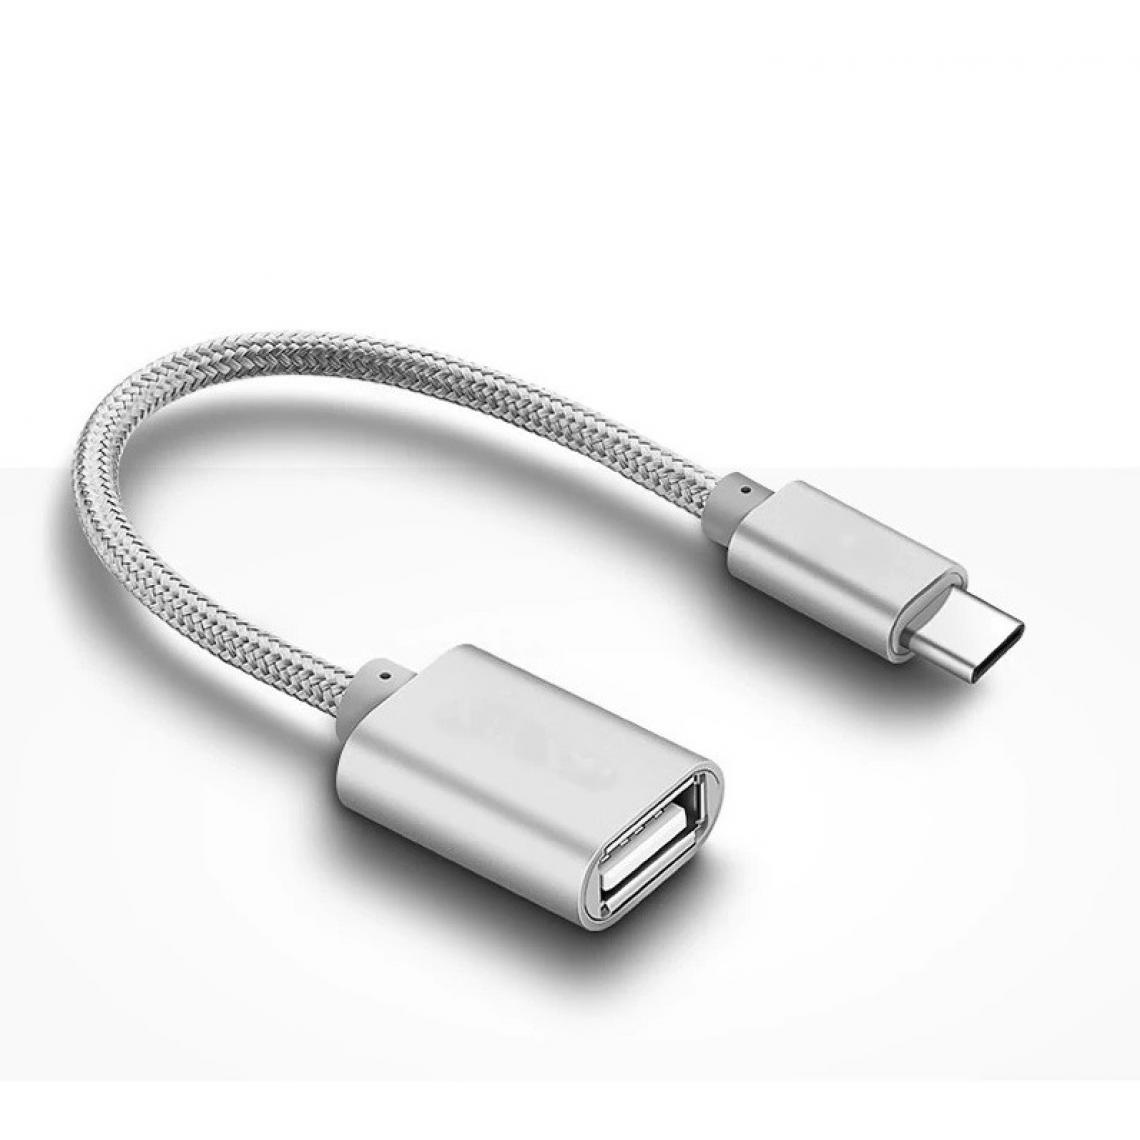 Shot - Adaptateur Type C/USB pour "SAMSUNG Galaxy Note 20 Ultra" Smartphone & MAC USB-C Clef (ARGENT) - Autres accessoires smartphone